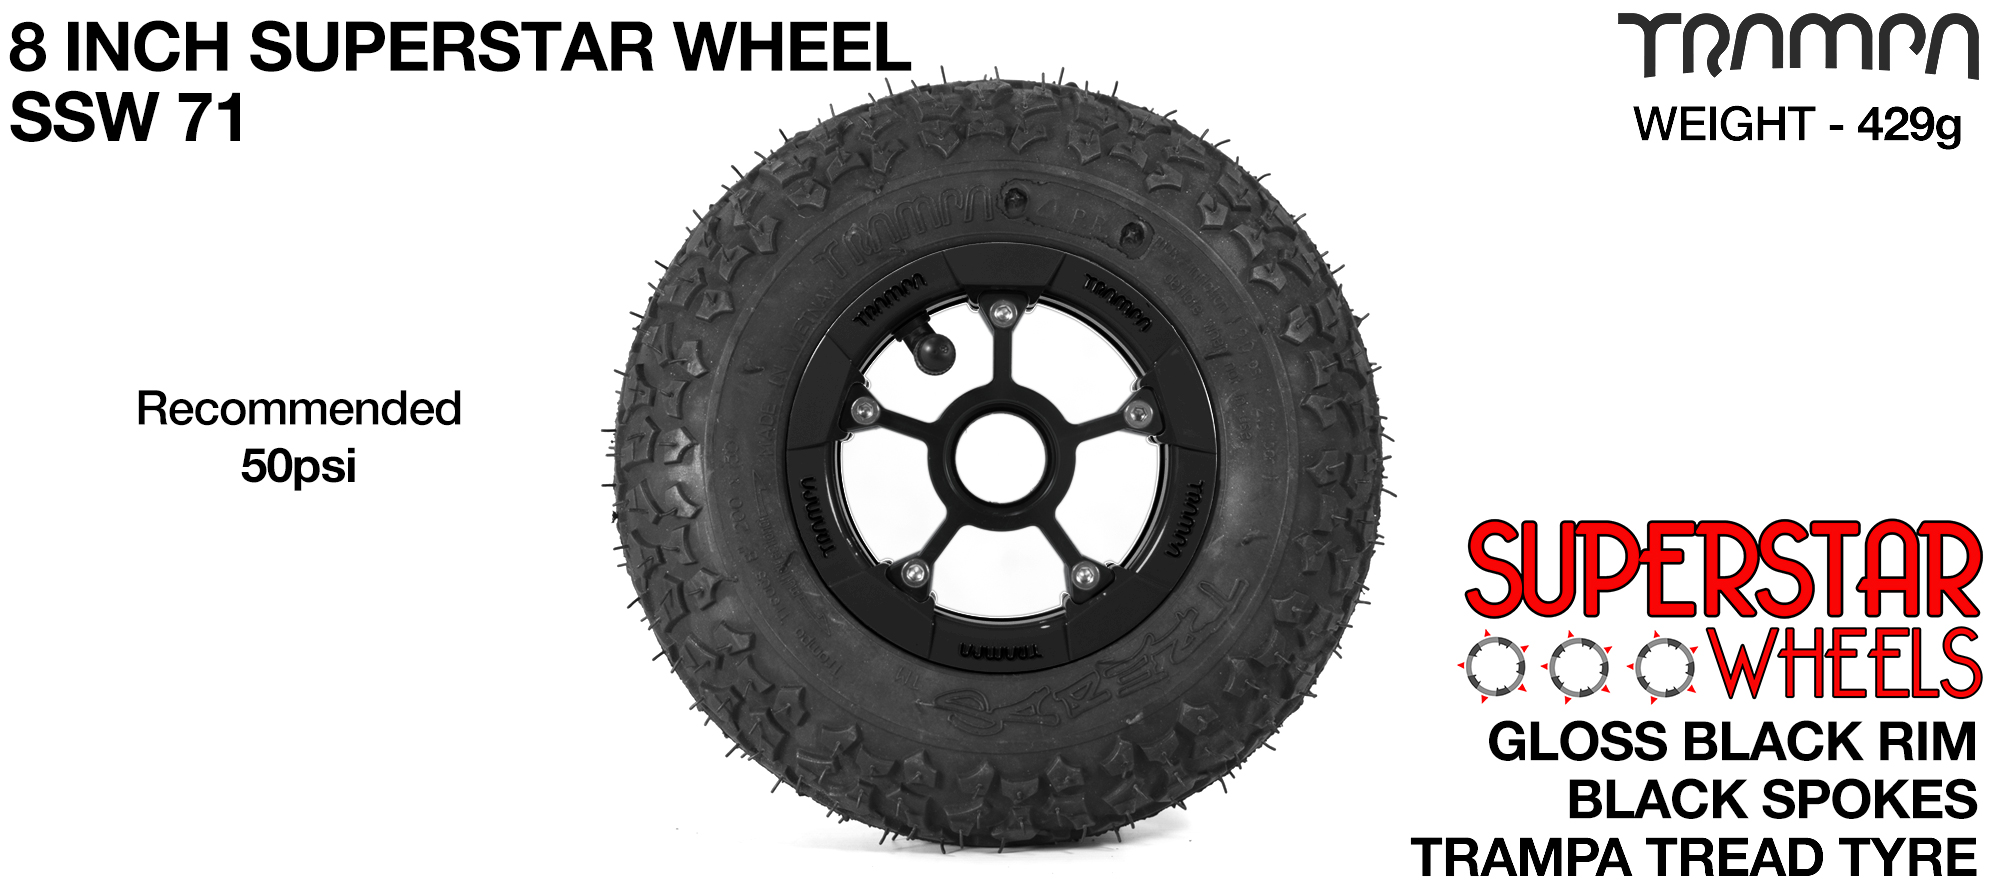 Superstar 8 inch wheel - Black Gloss Rim with Black Anodised spokes & TRAMPA TREAD 8 Inch Tyre